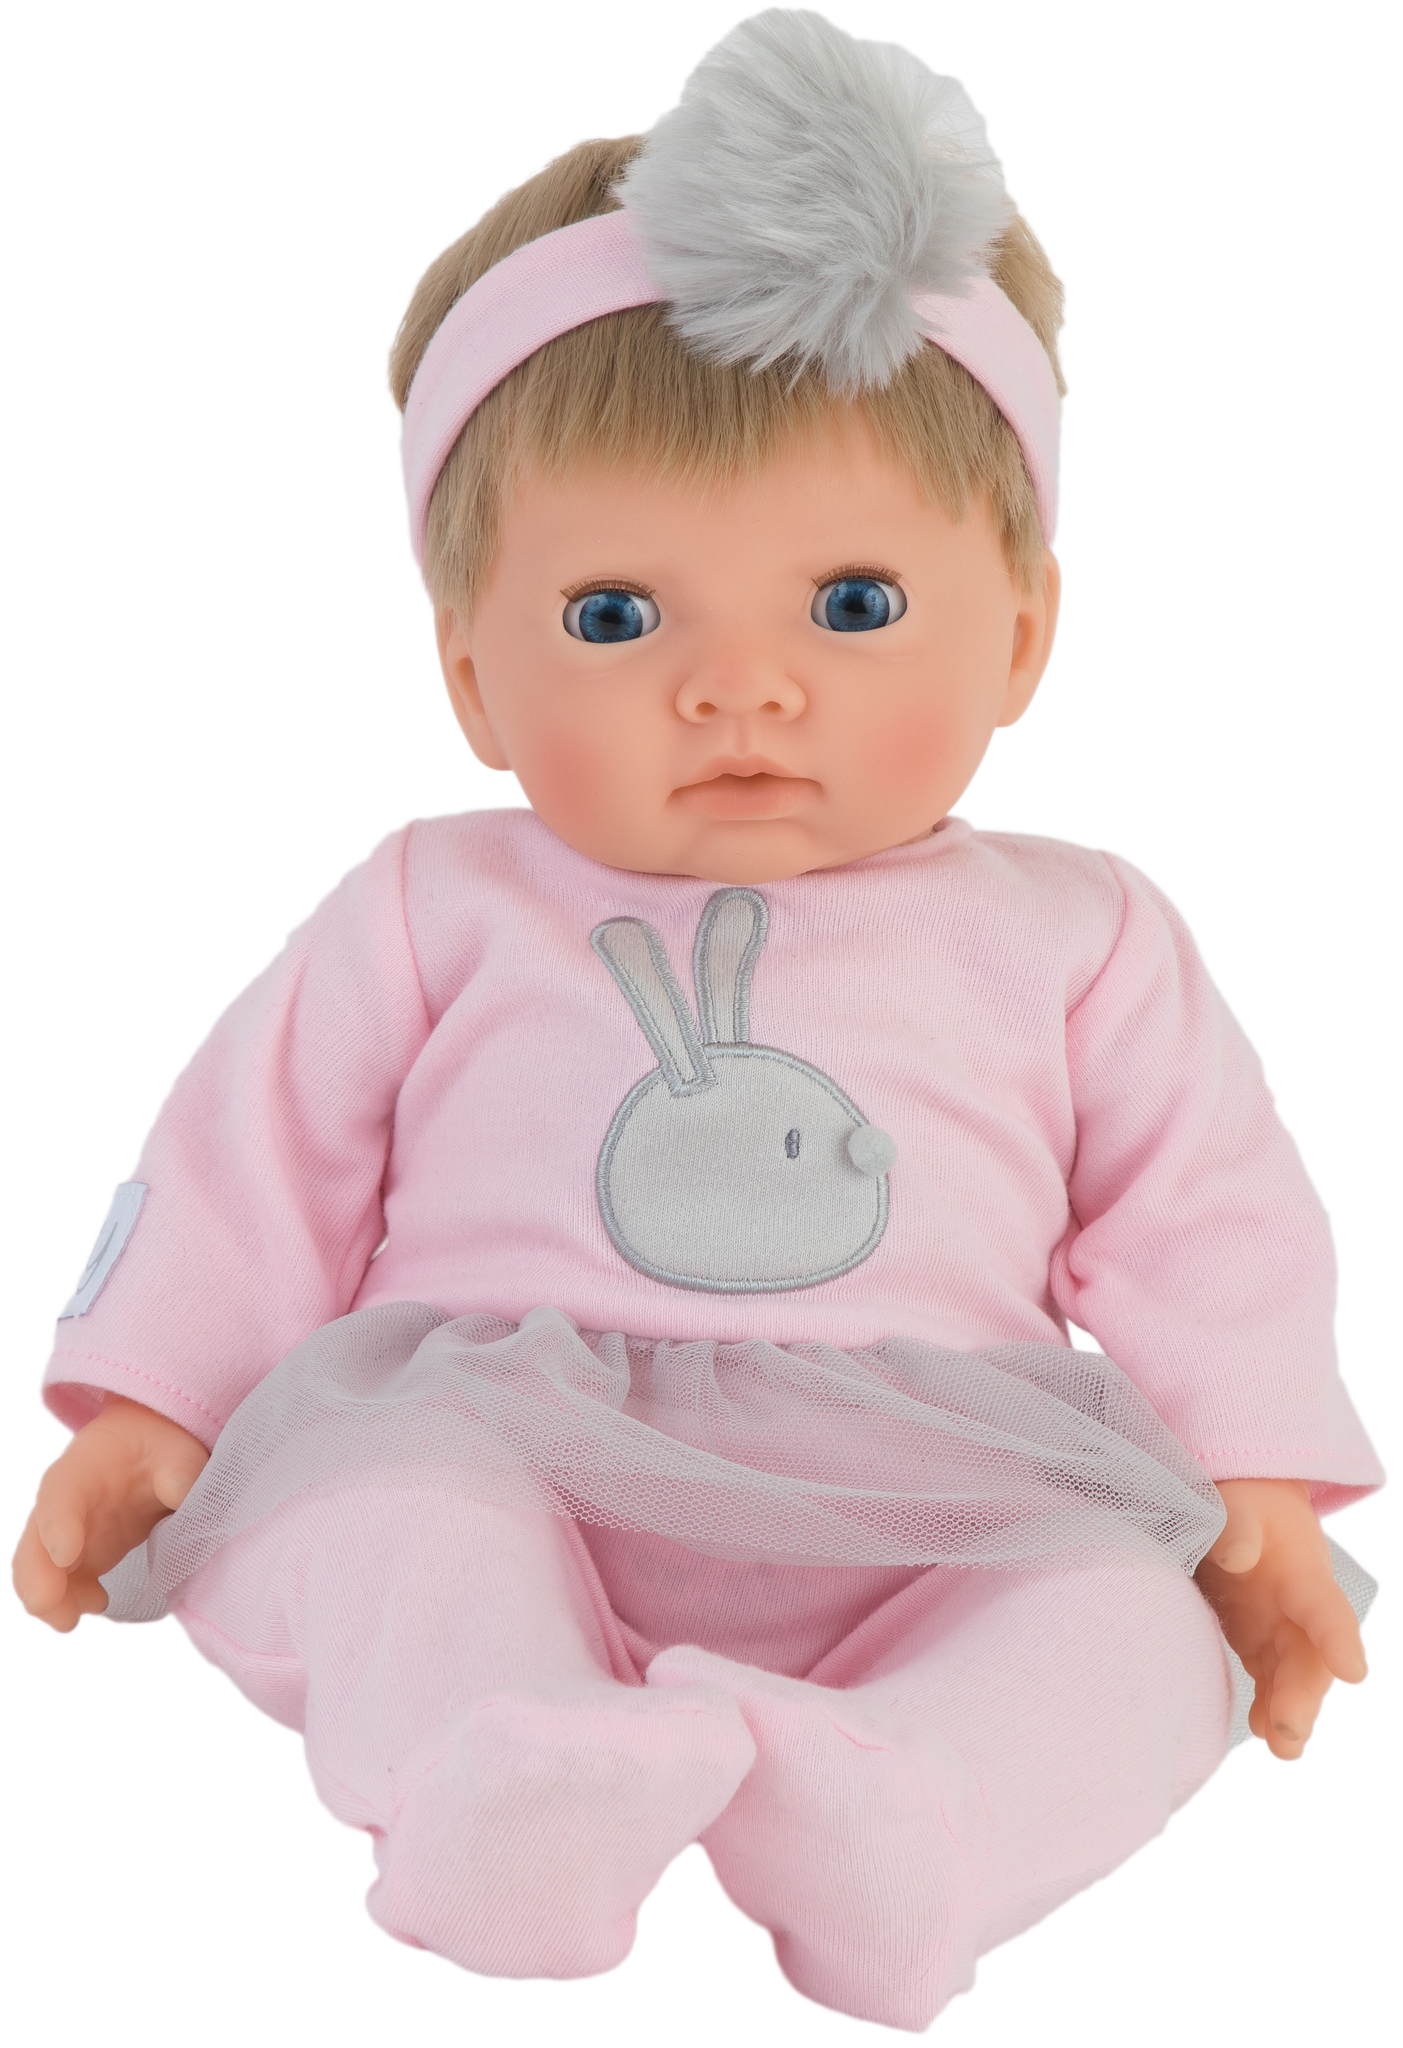 Tiny Treasure - Doll w/Blond Hair & Pink Pom-Pom Outfit (30138)